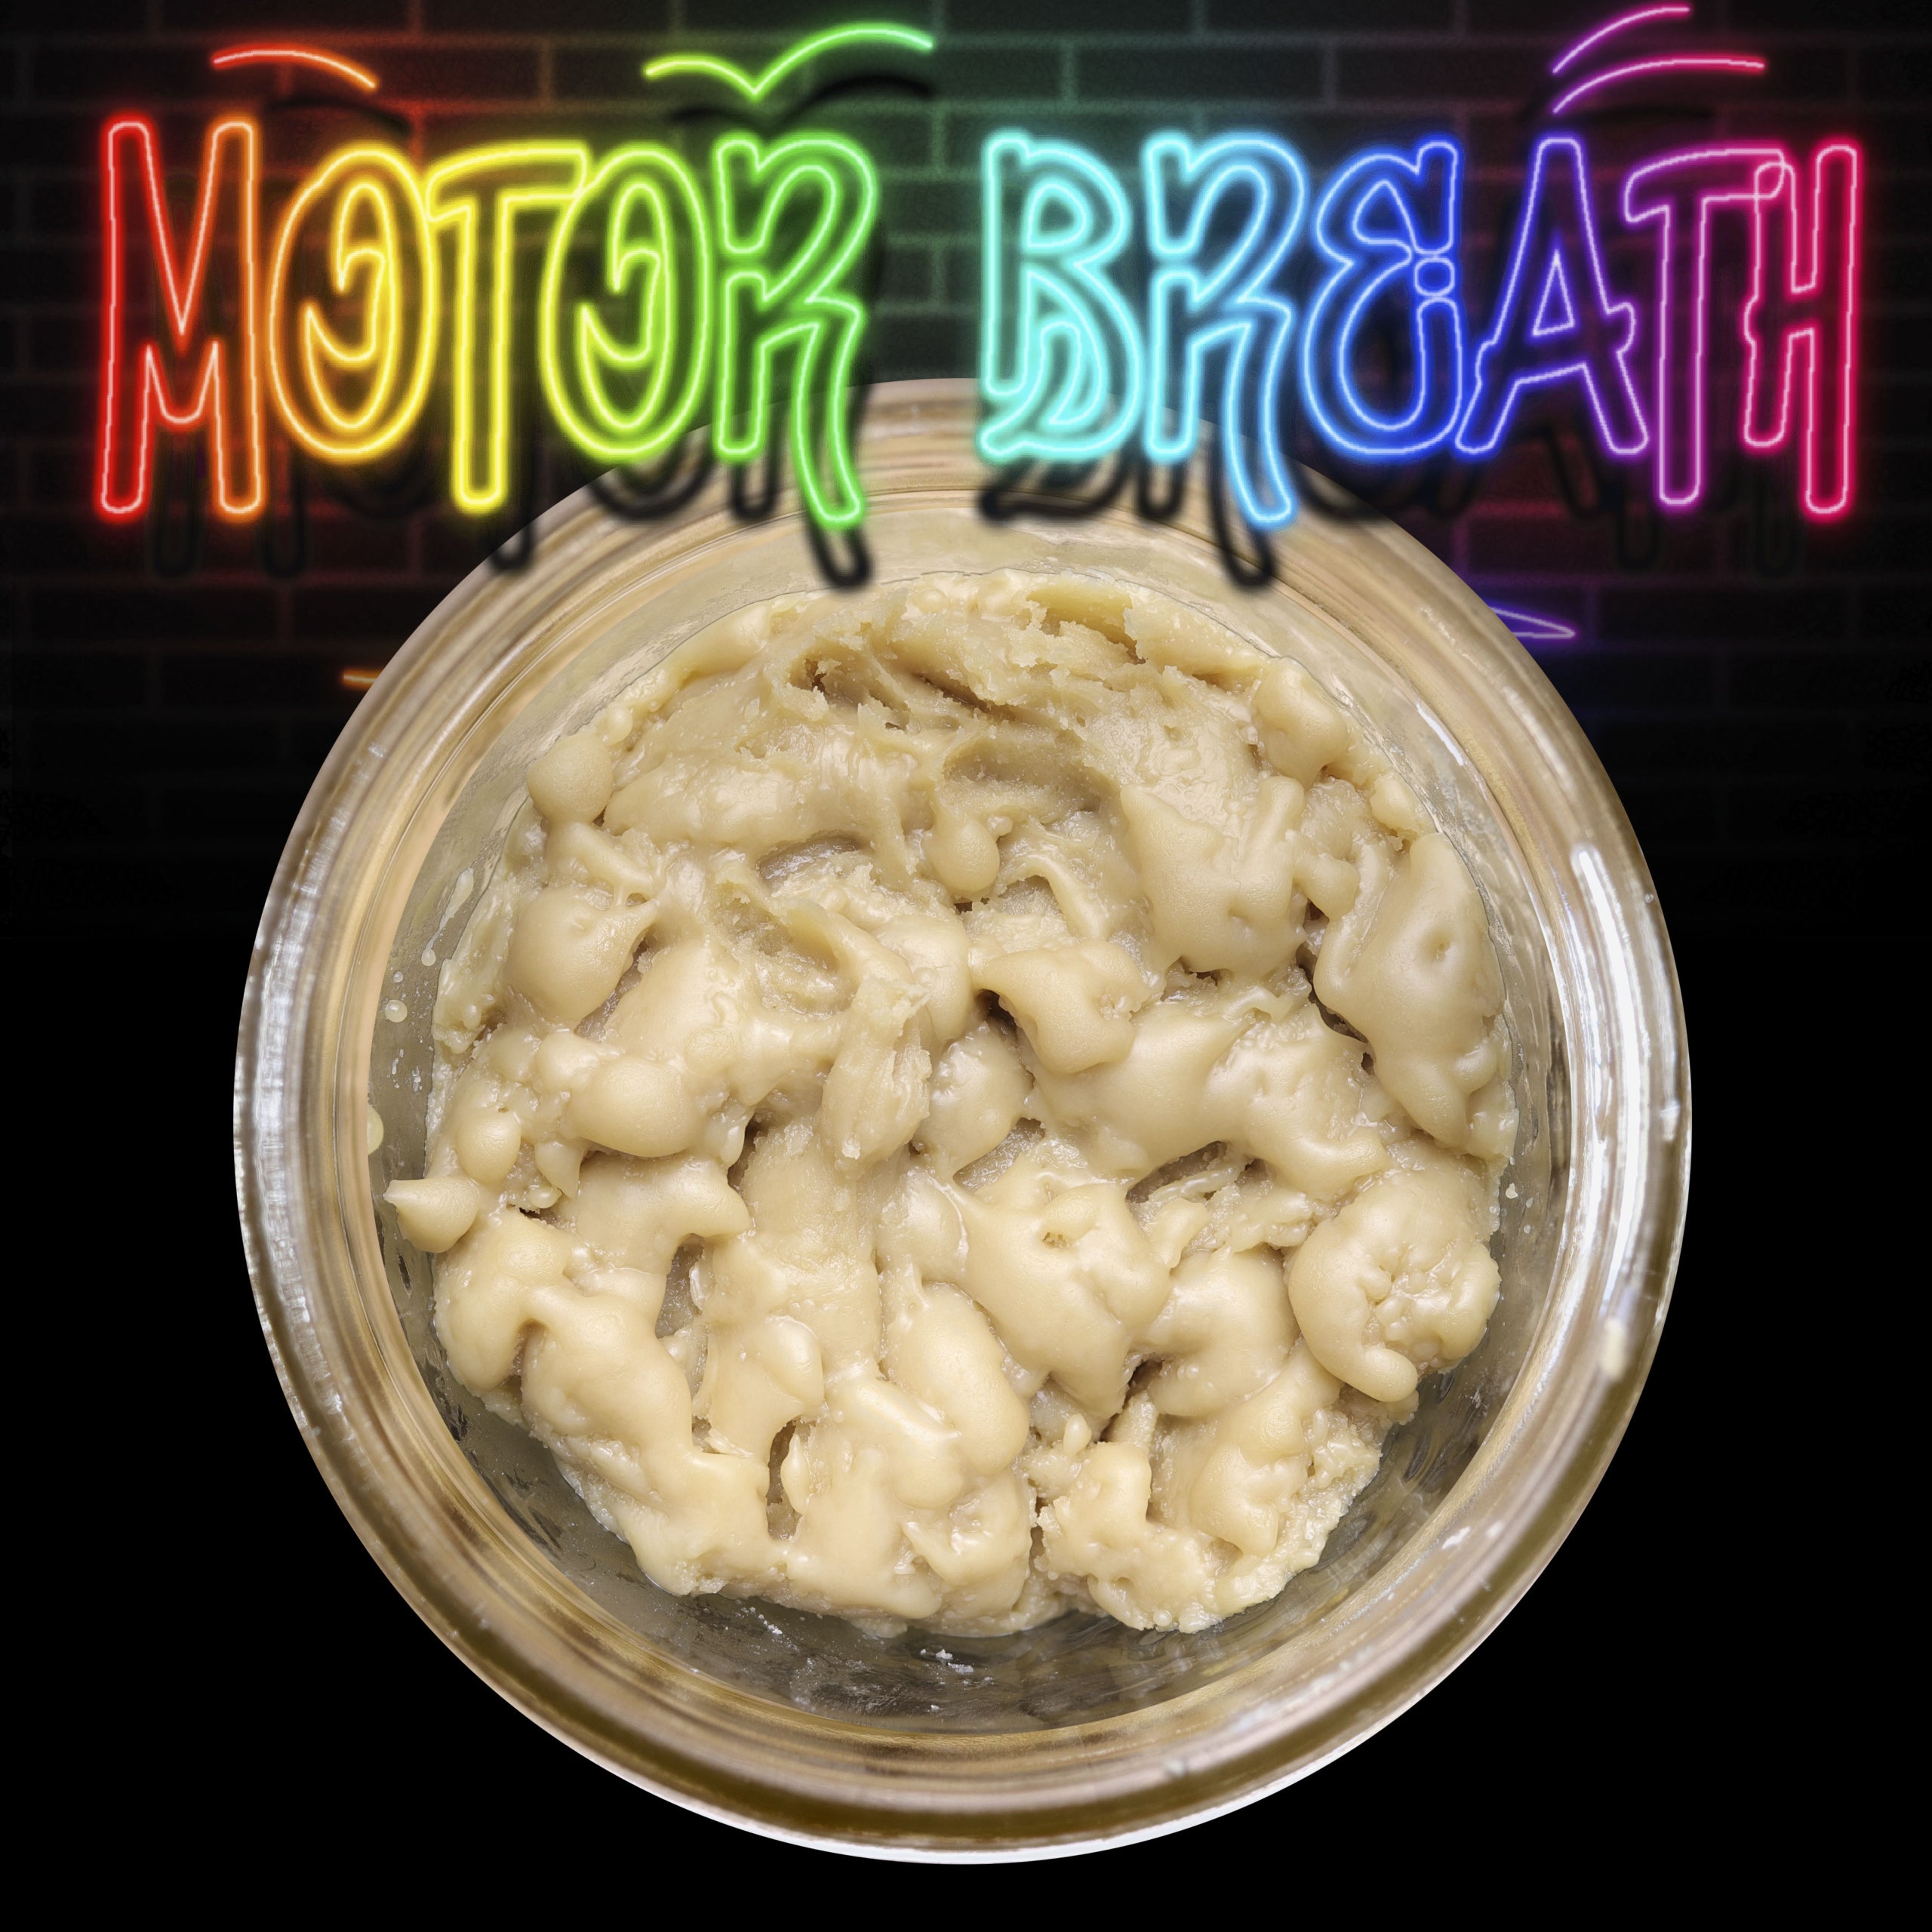 MOTOR BREATH